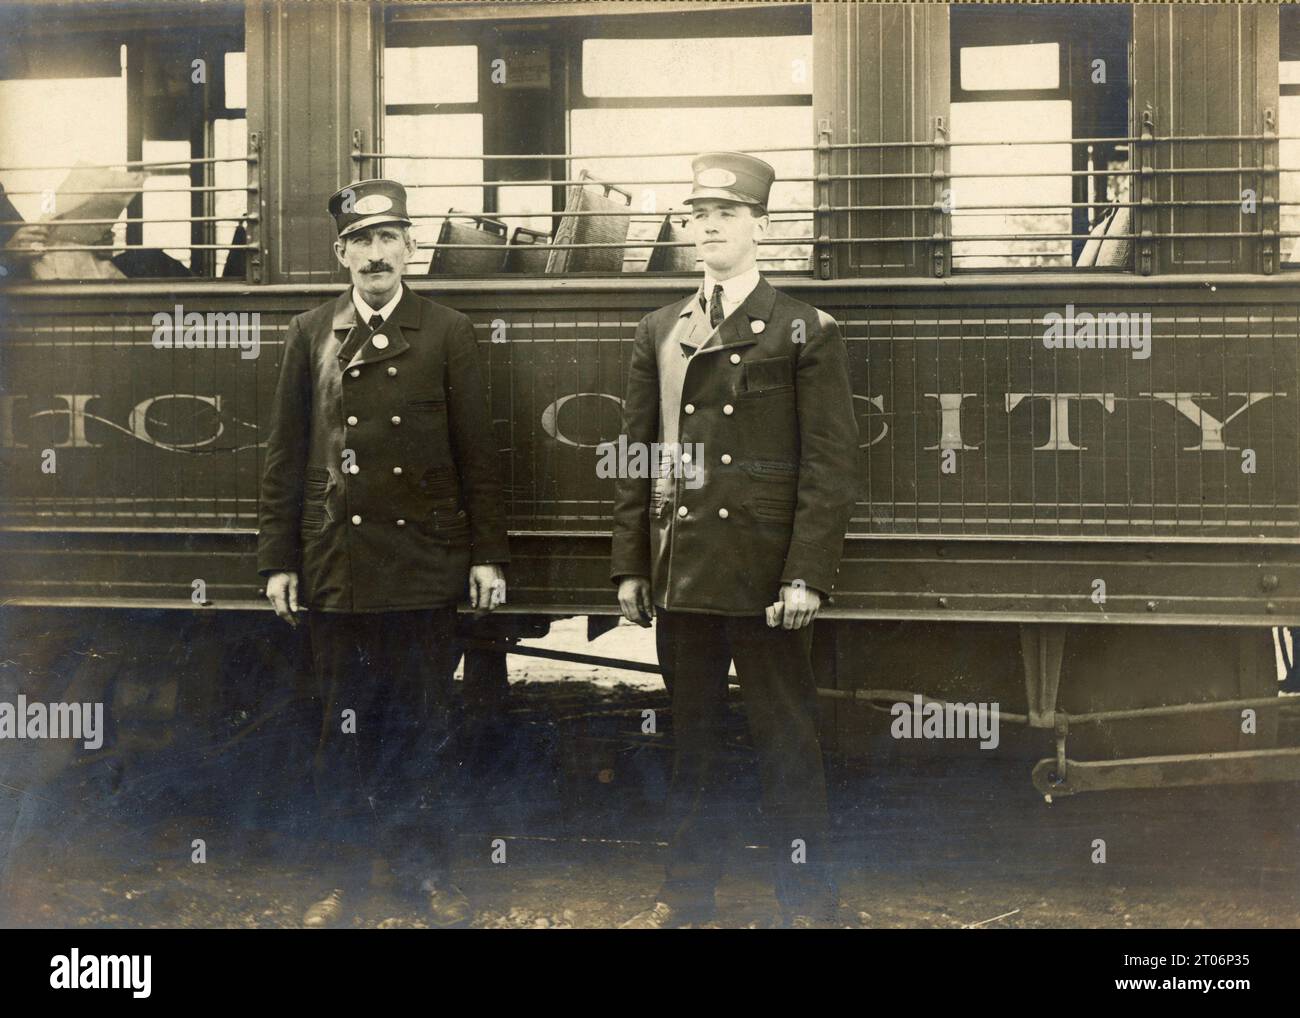 Train Conductors early 1900s, Vintage Train Conductors Stock Photo